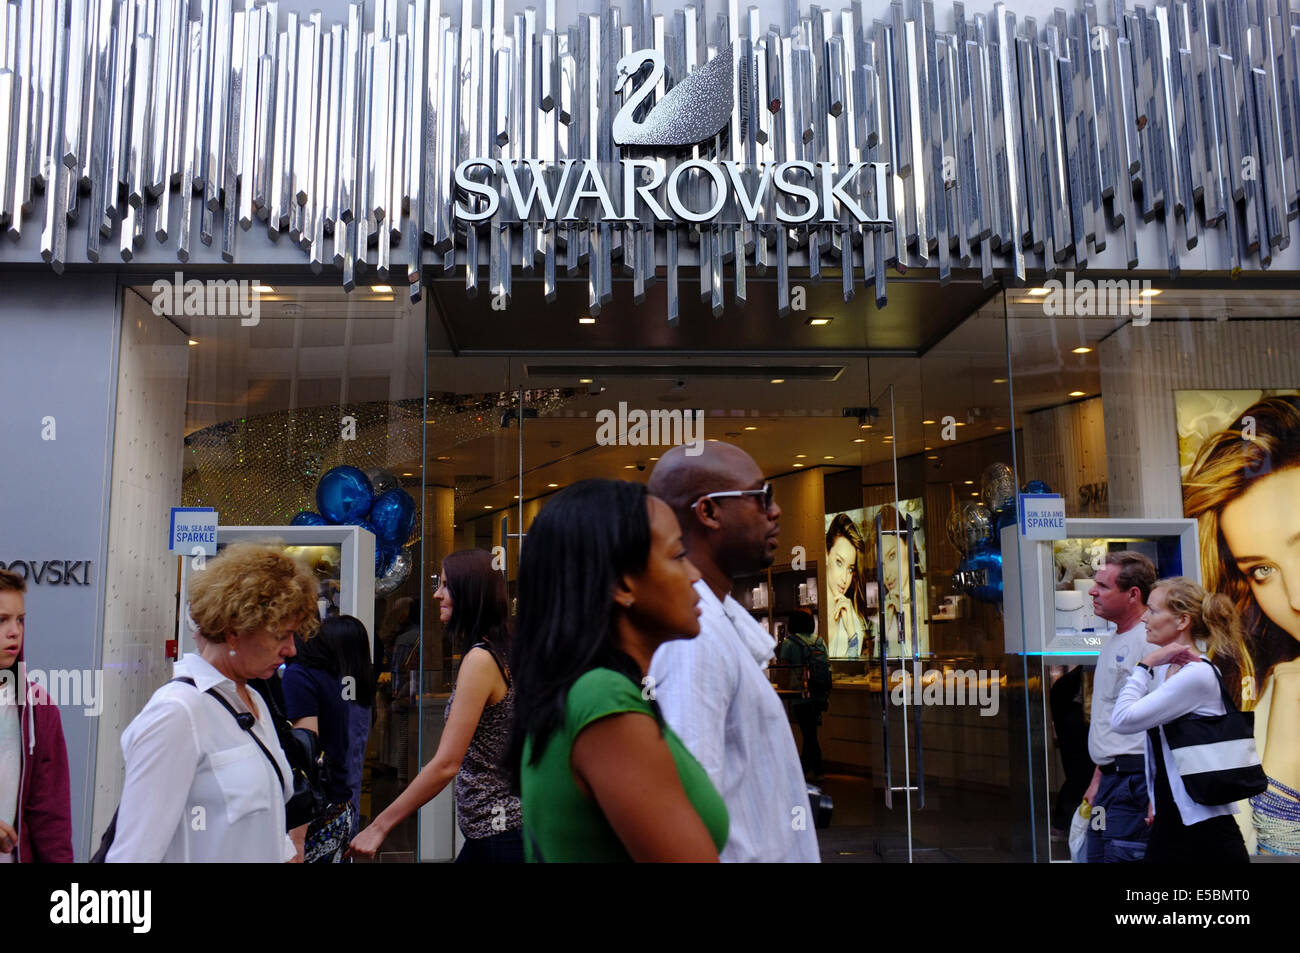 SWAROVSKI shop on Oxford Street, London Stock Photo - Alamy